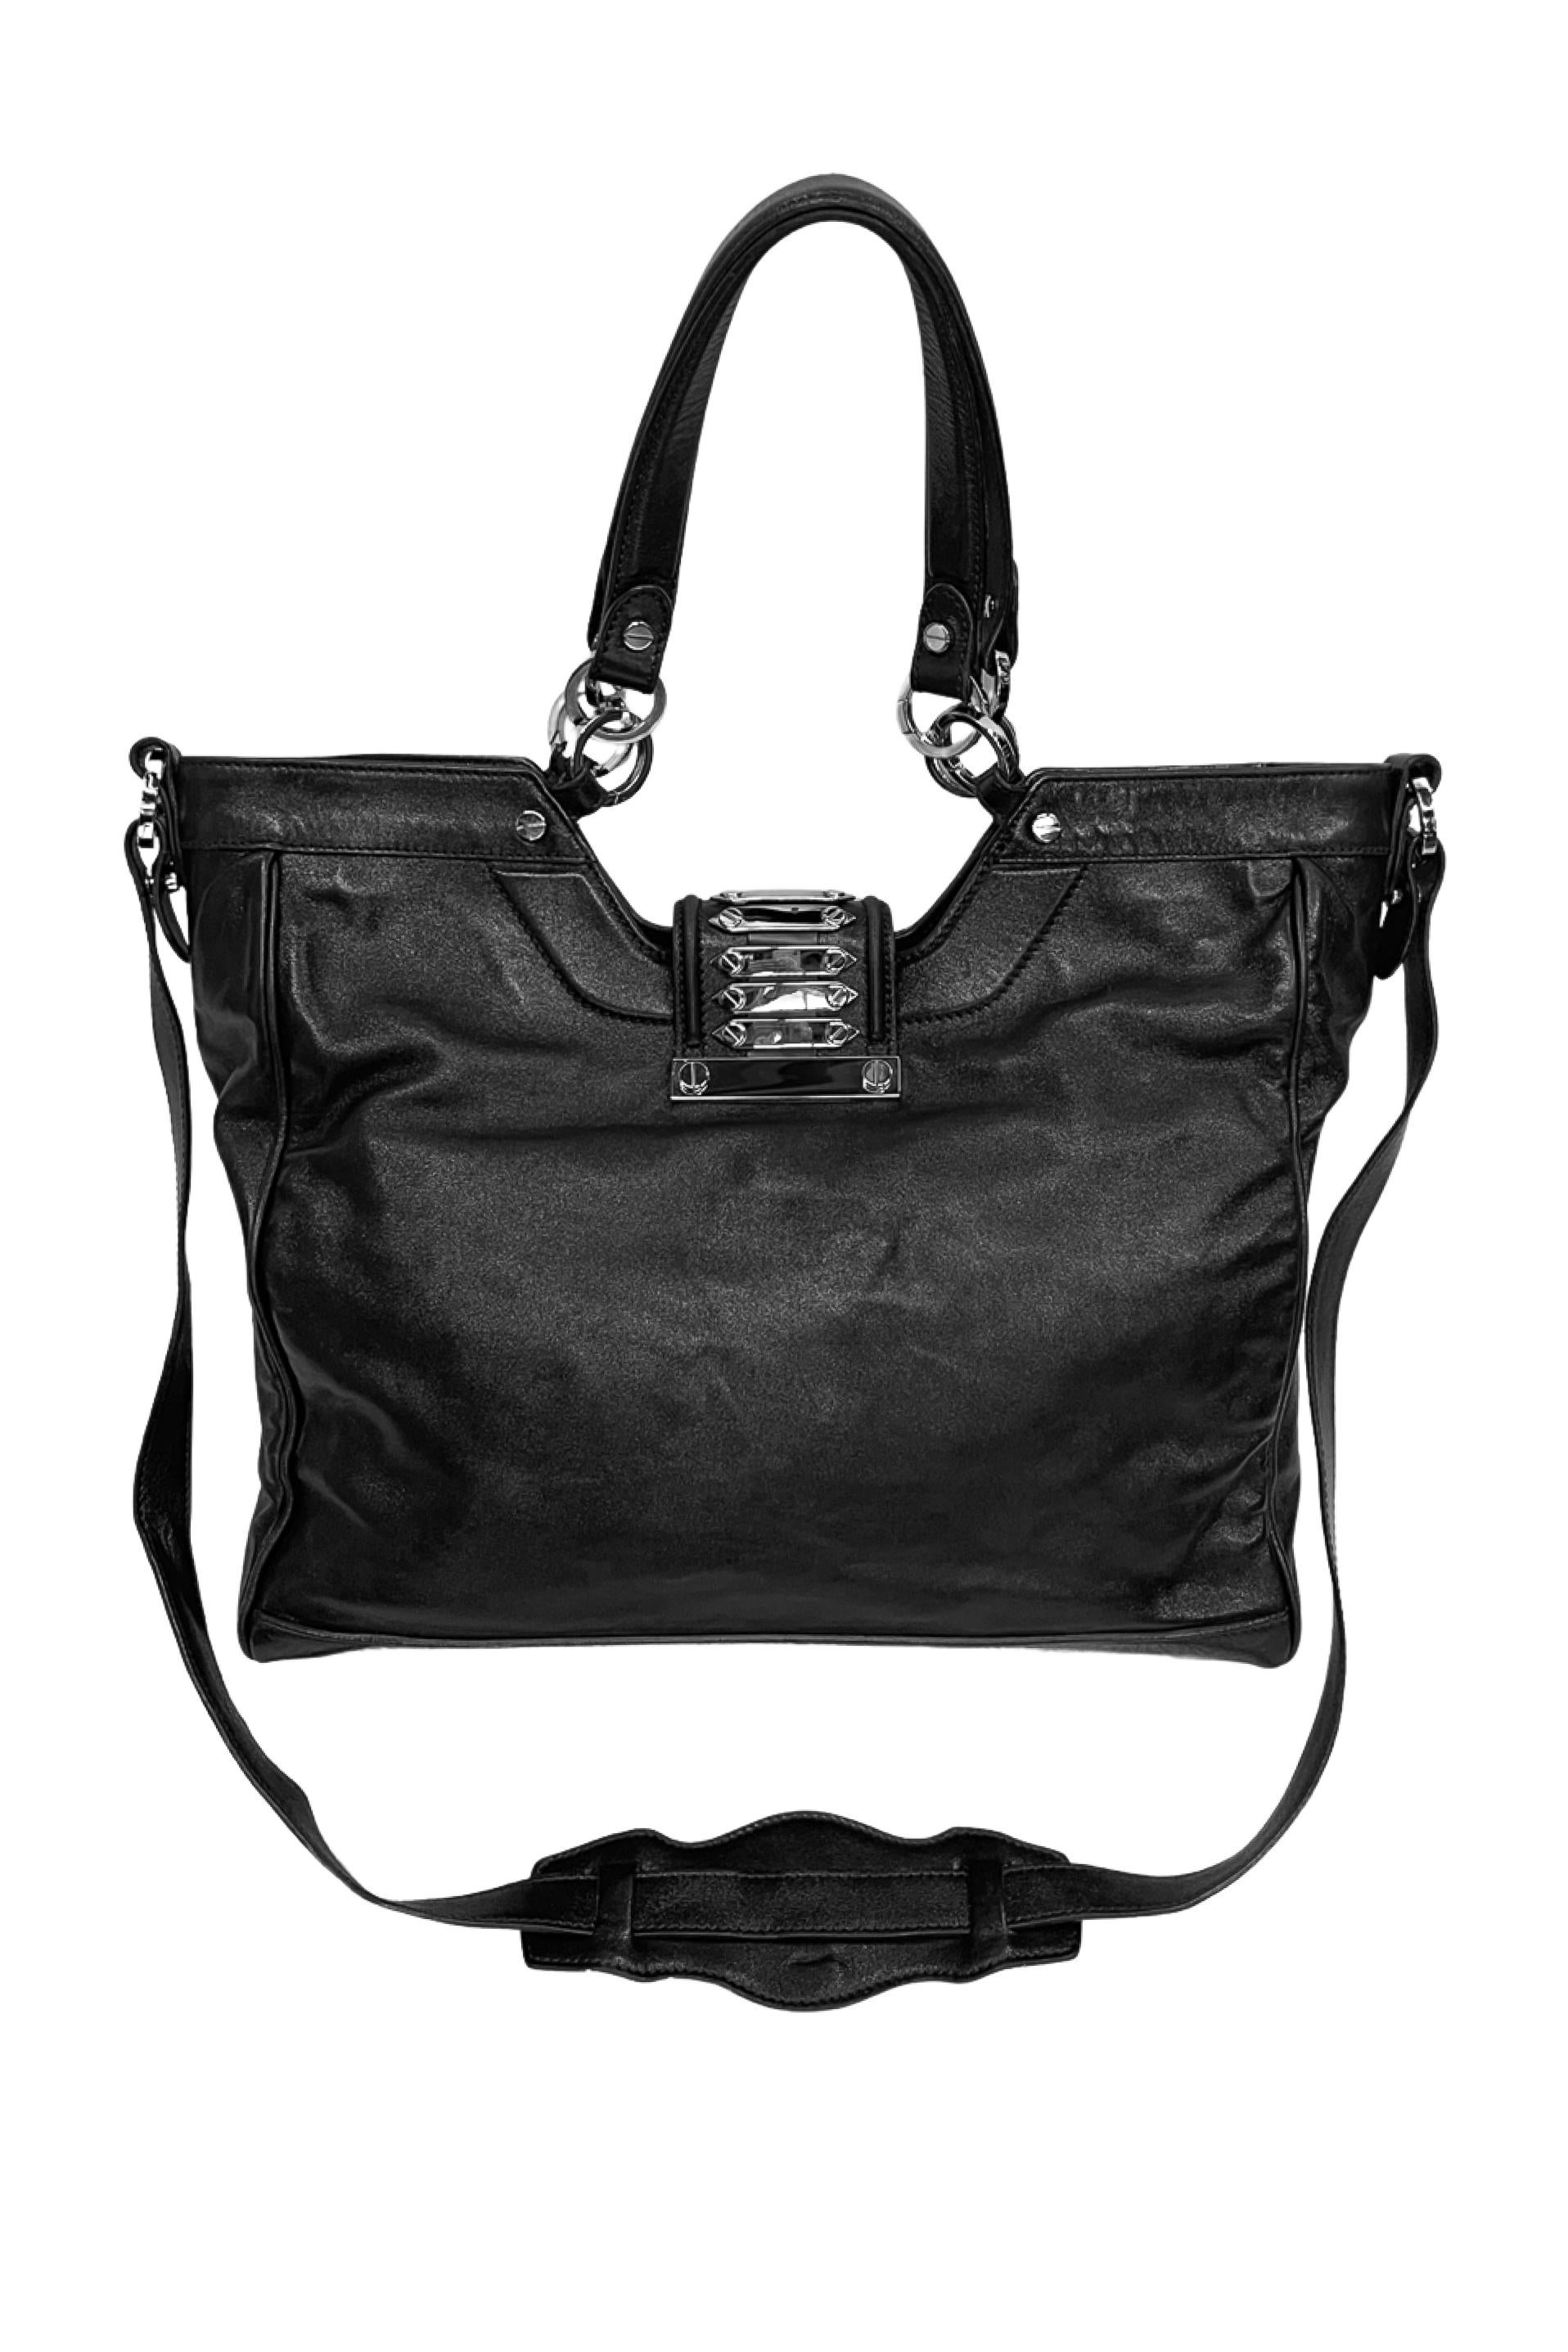 Balenciaga by Nicolas Ghesquiere Black Leather & Studded Chrome Bag 2007 For Sale 3